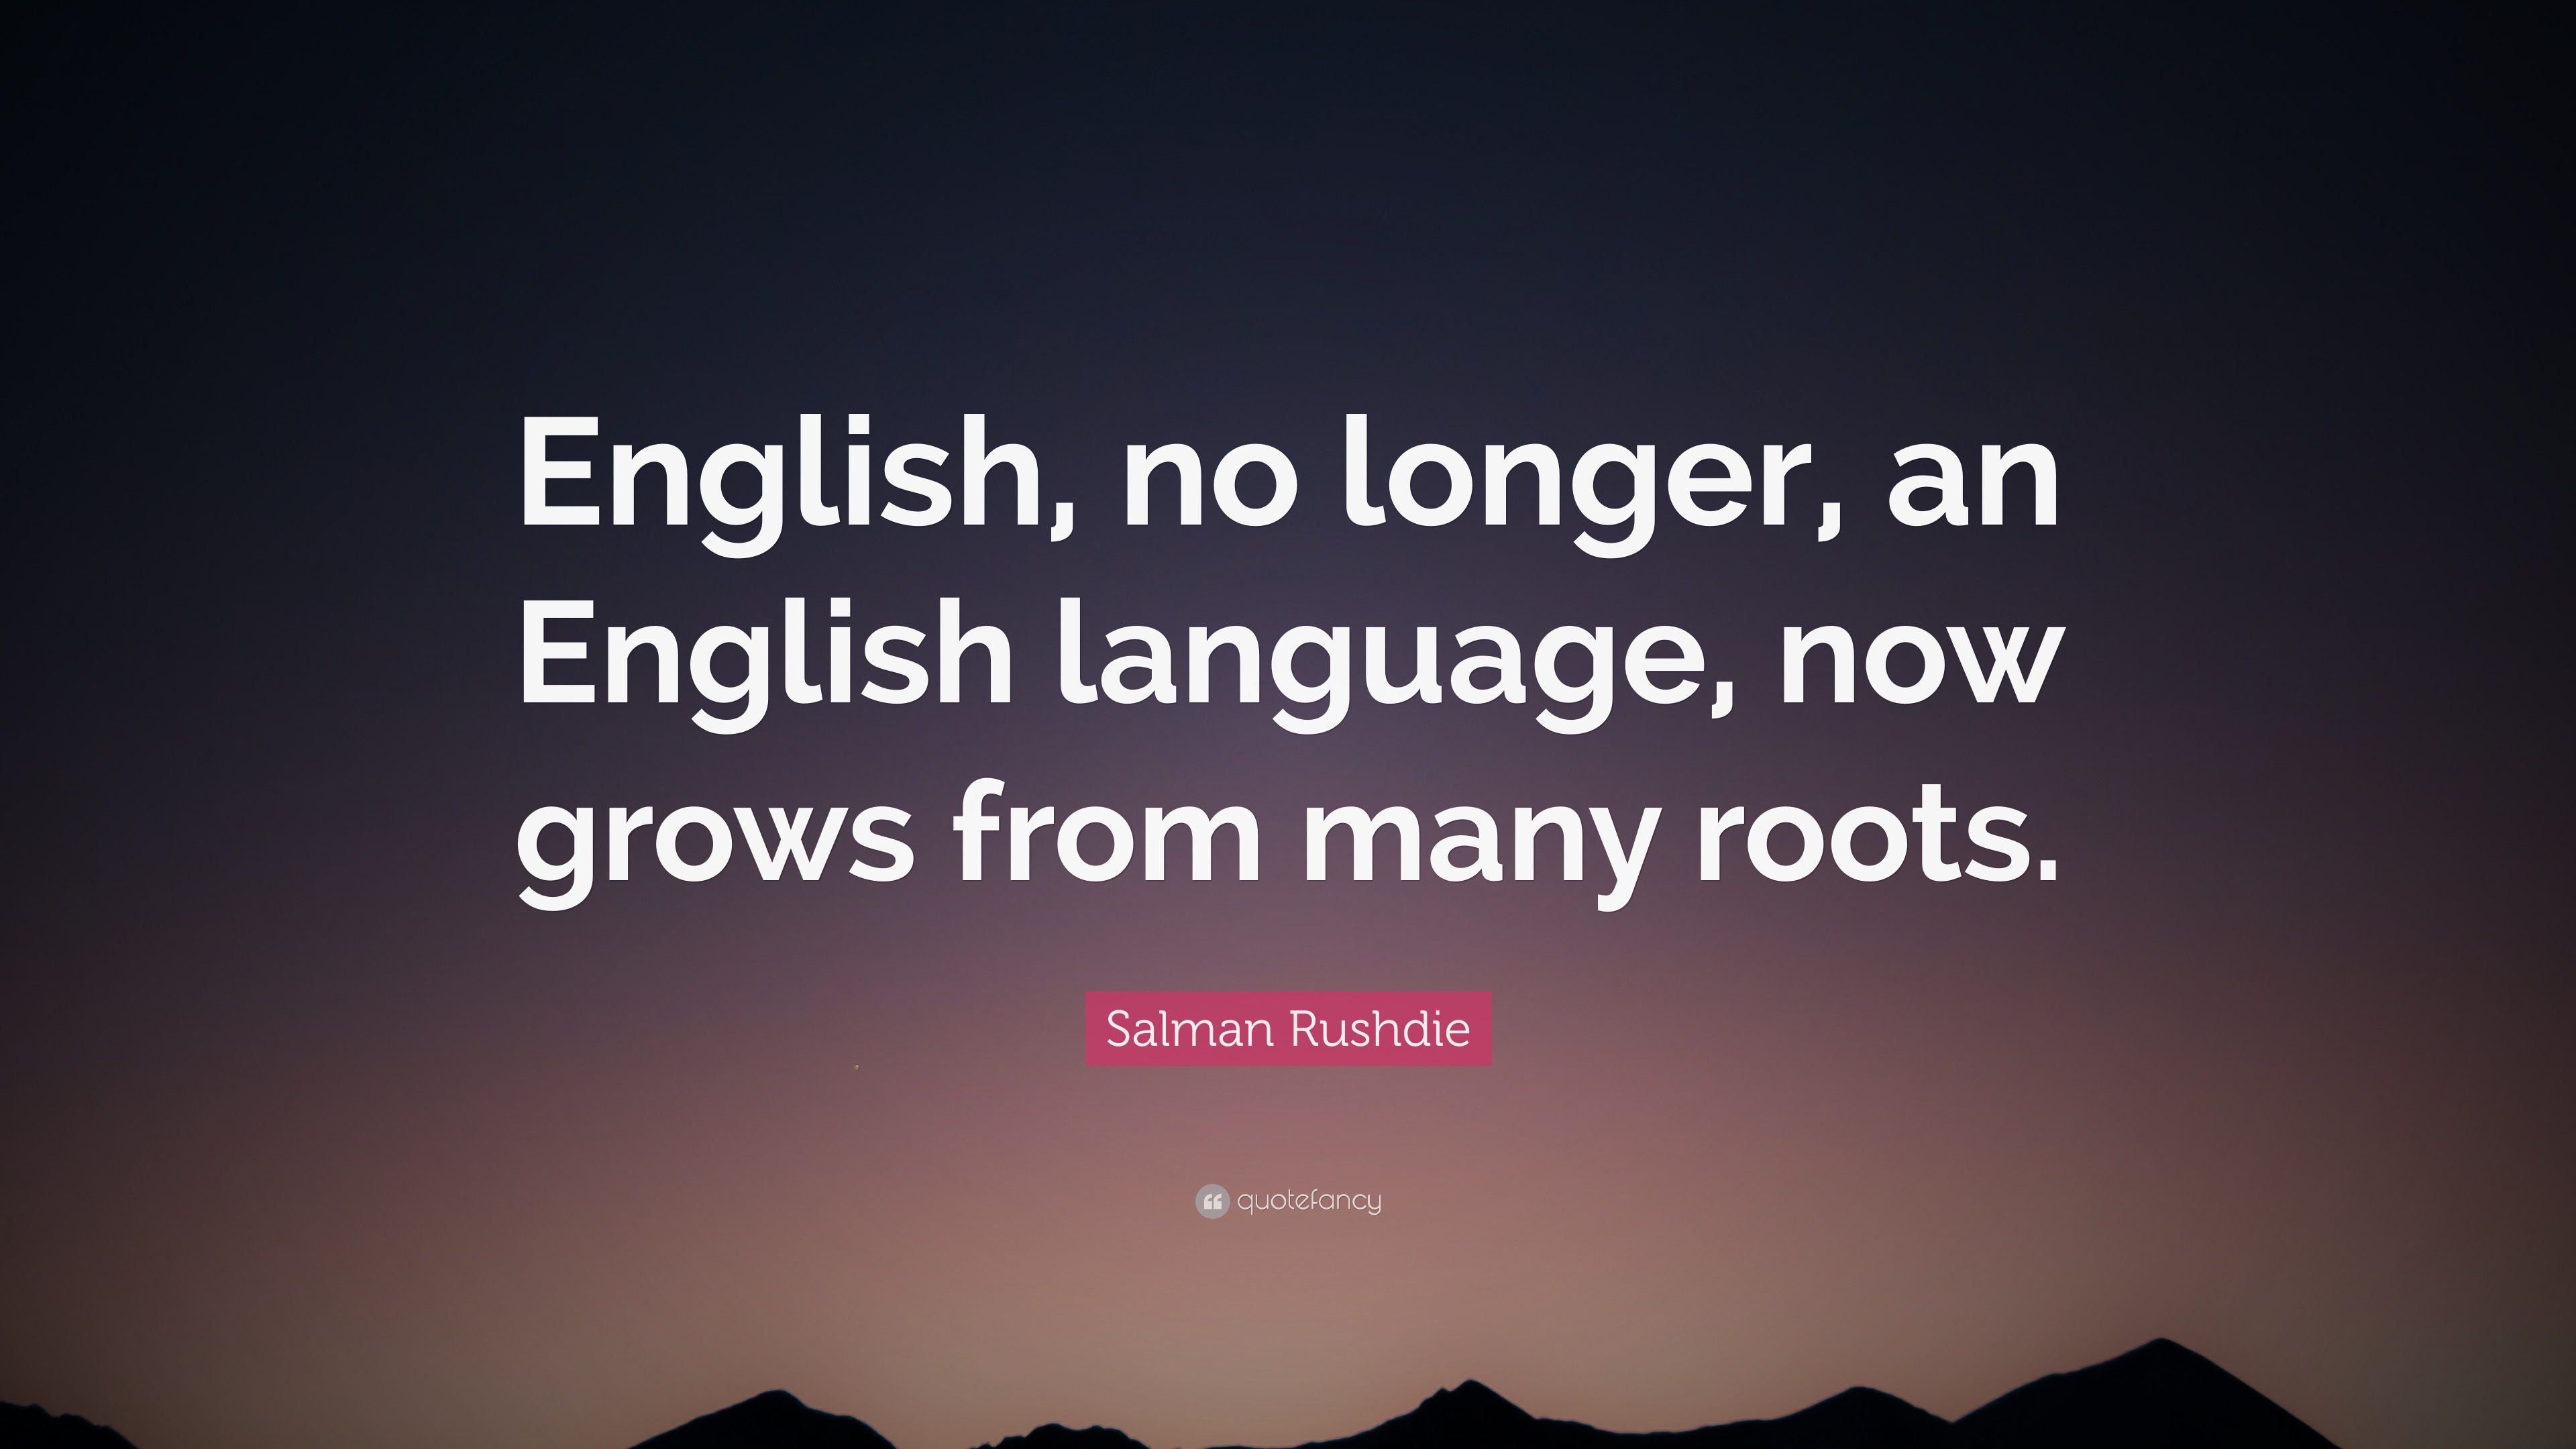 Salman Rushdie Quote: “English, no longer, an English language, now